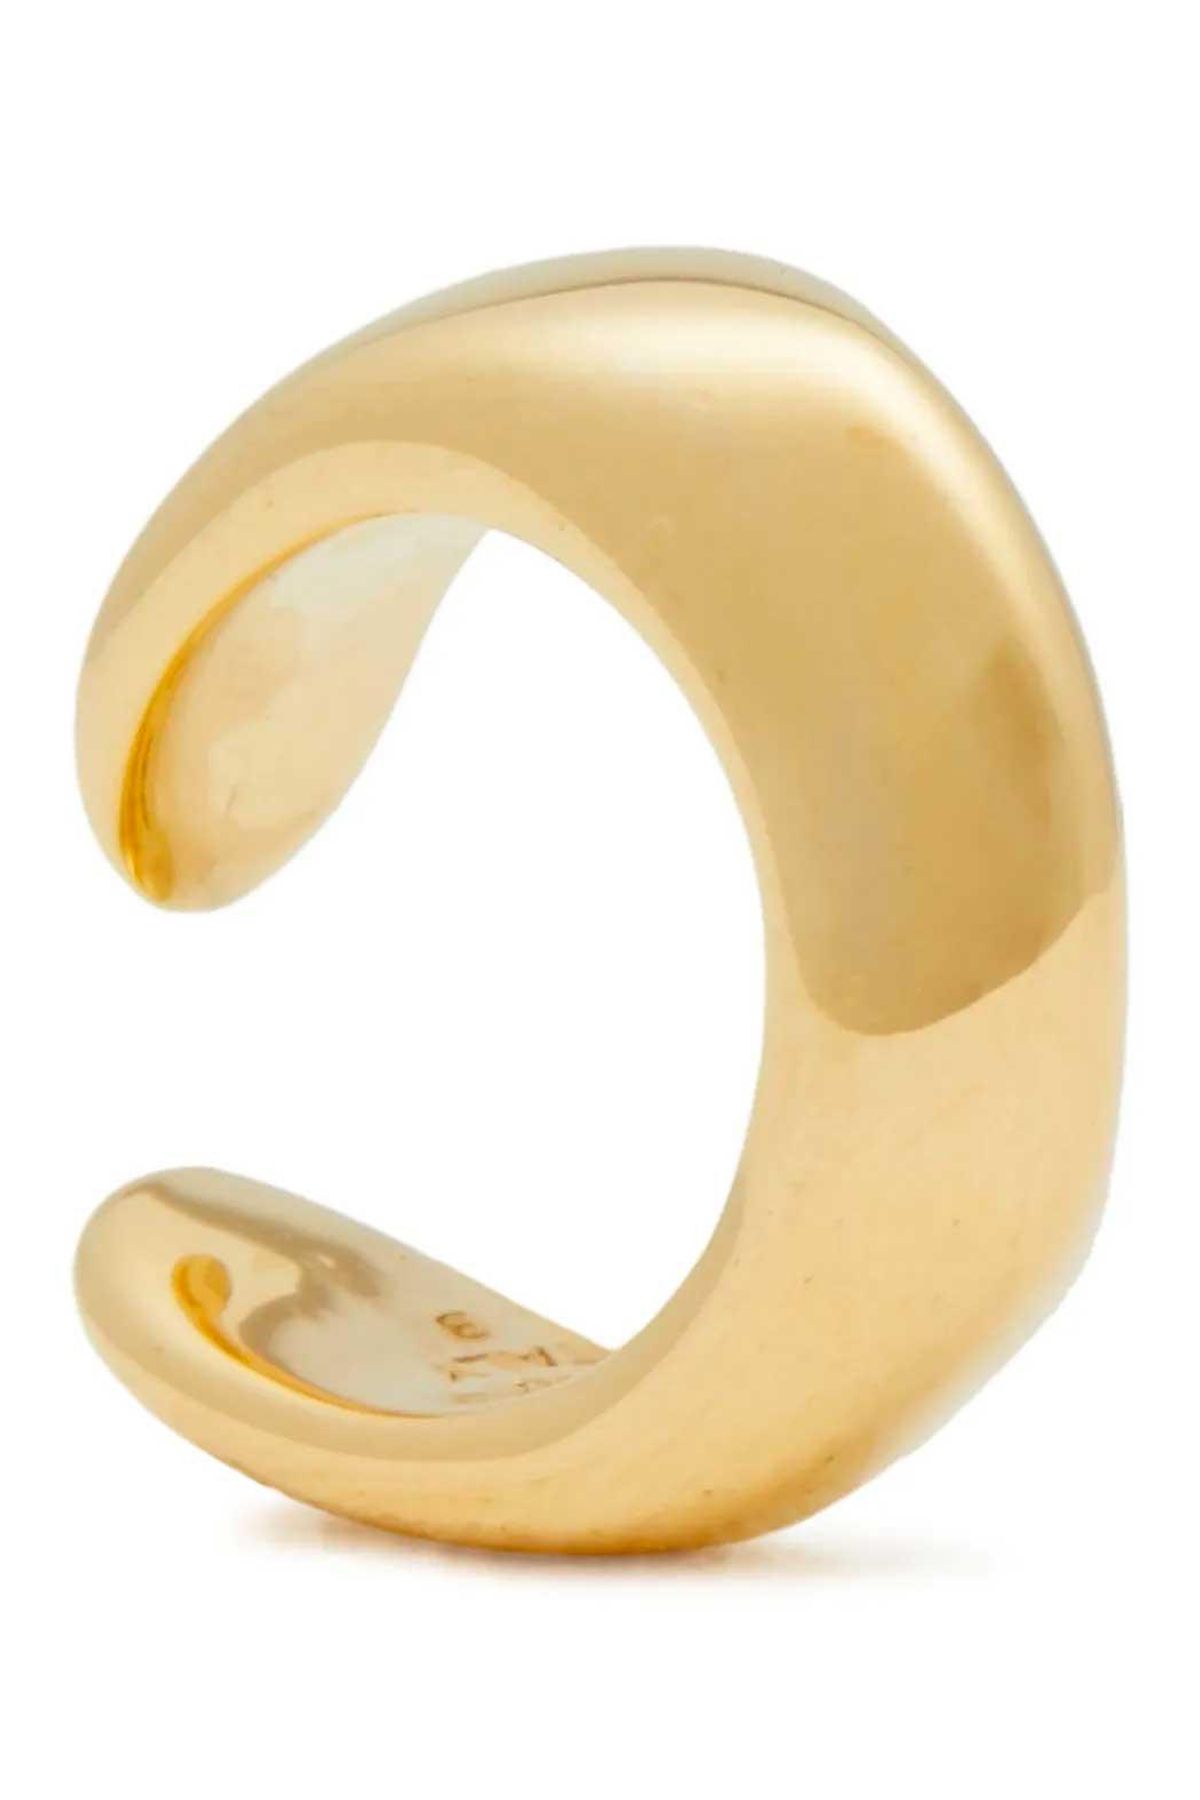 cornelia webb 24 karat gold plated ear cuff